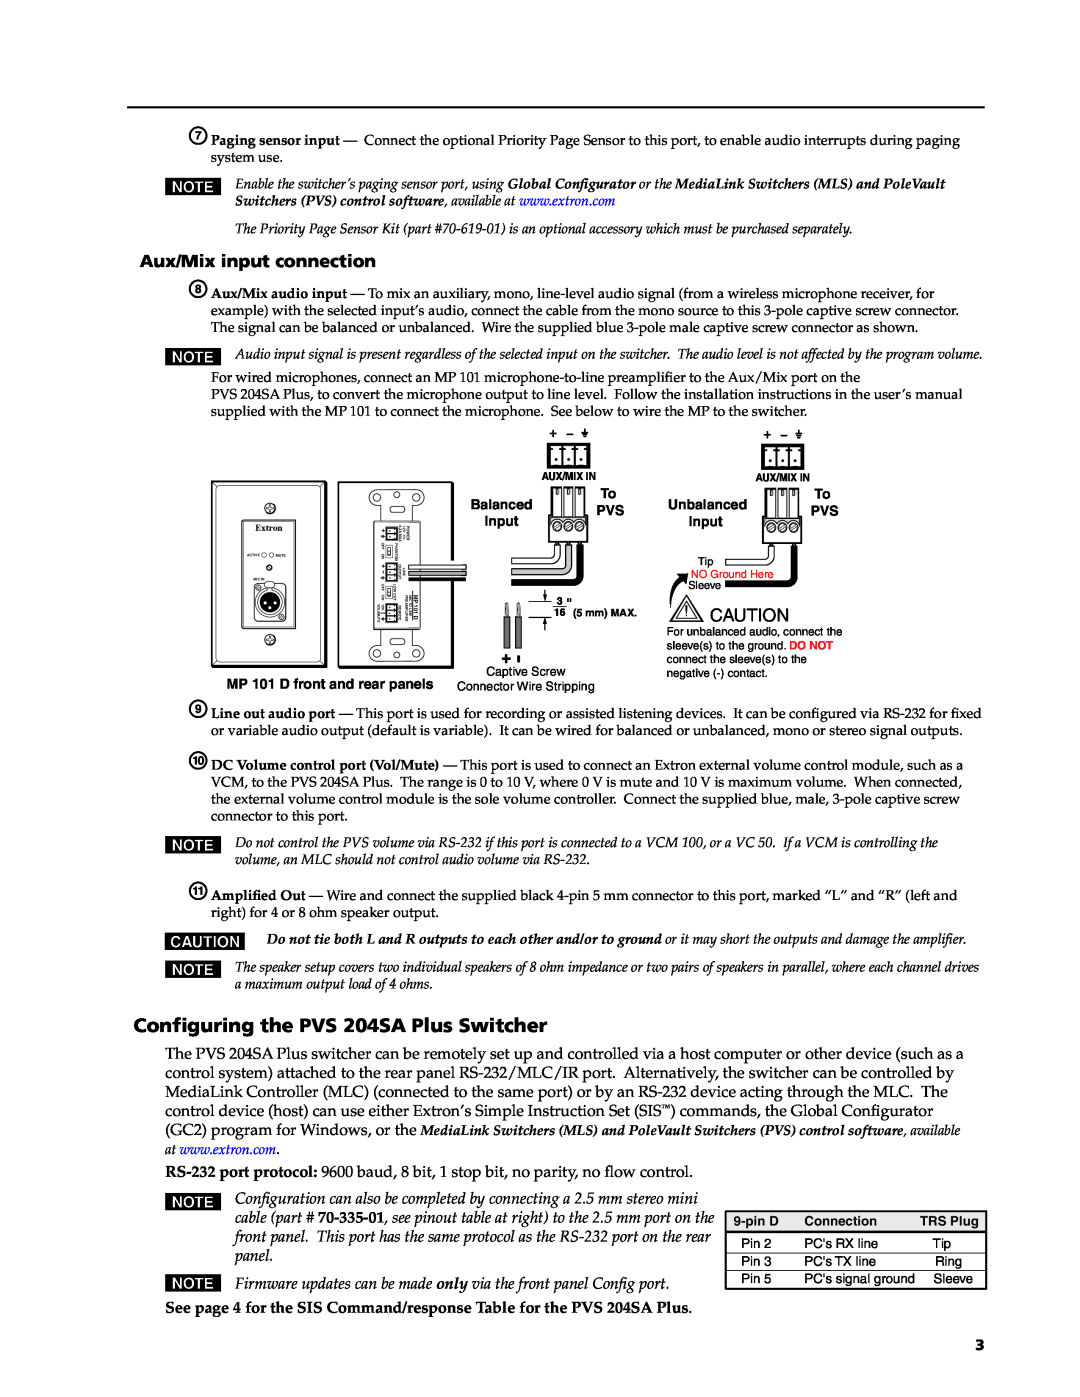 Extron electronic PVS 204SA PLUS installation manual Configuring the PVS 204SA Plus Switcher, Aux/Mix input connection 